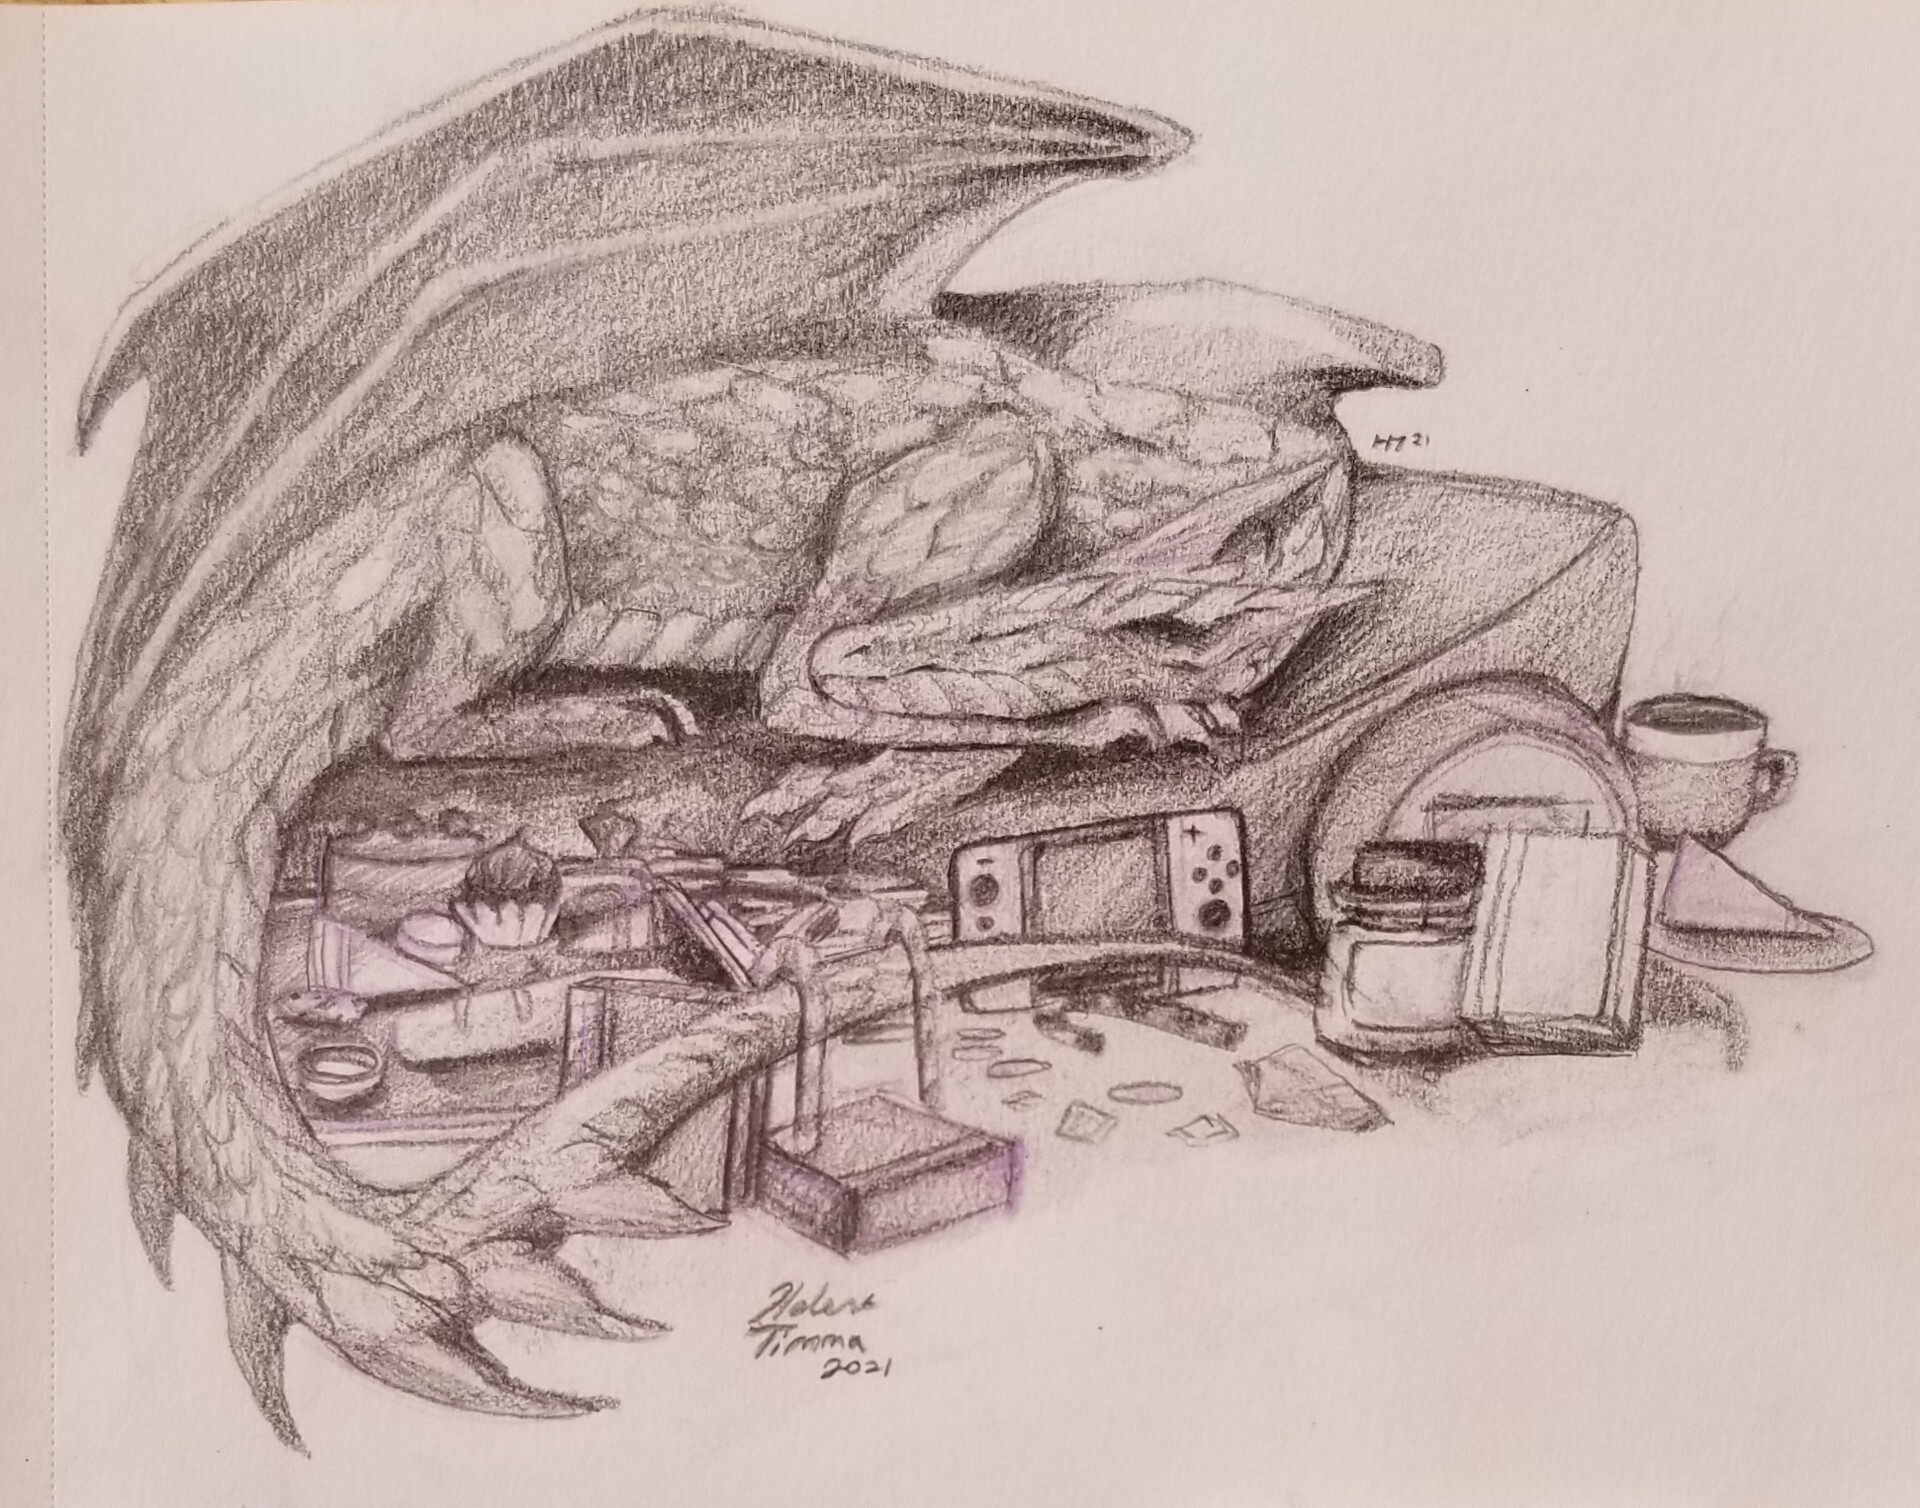 Curled Sleeping Dragon Sketch  Weasyl